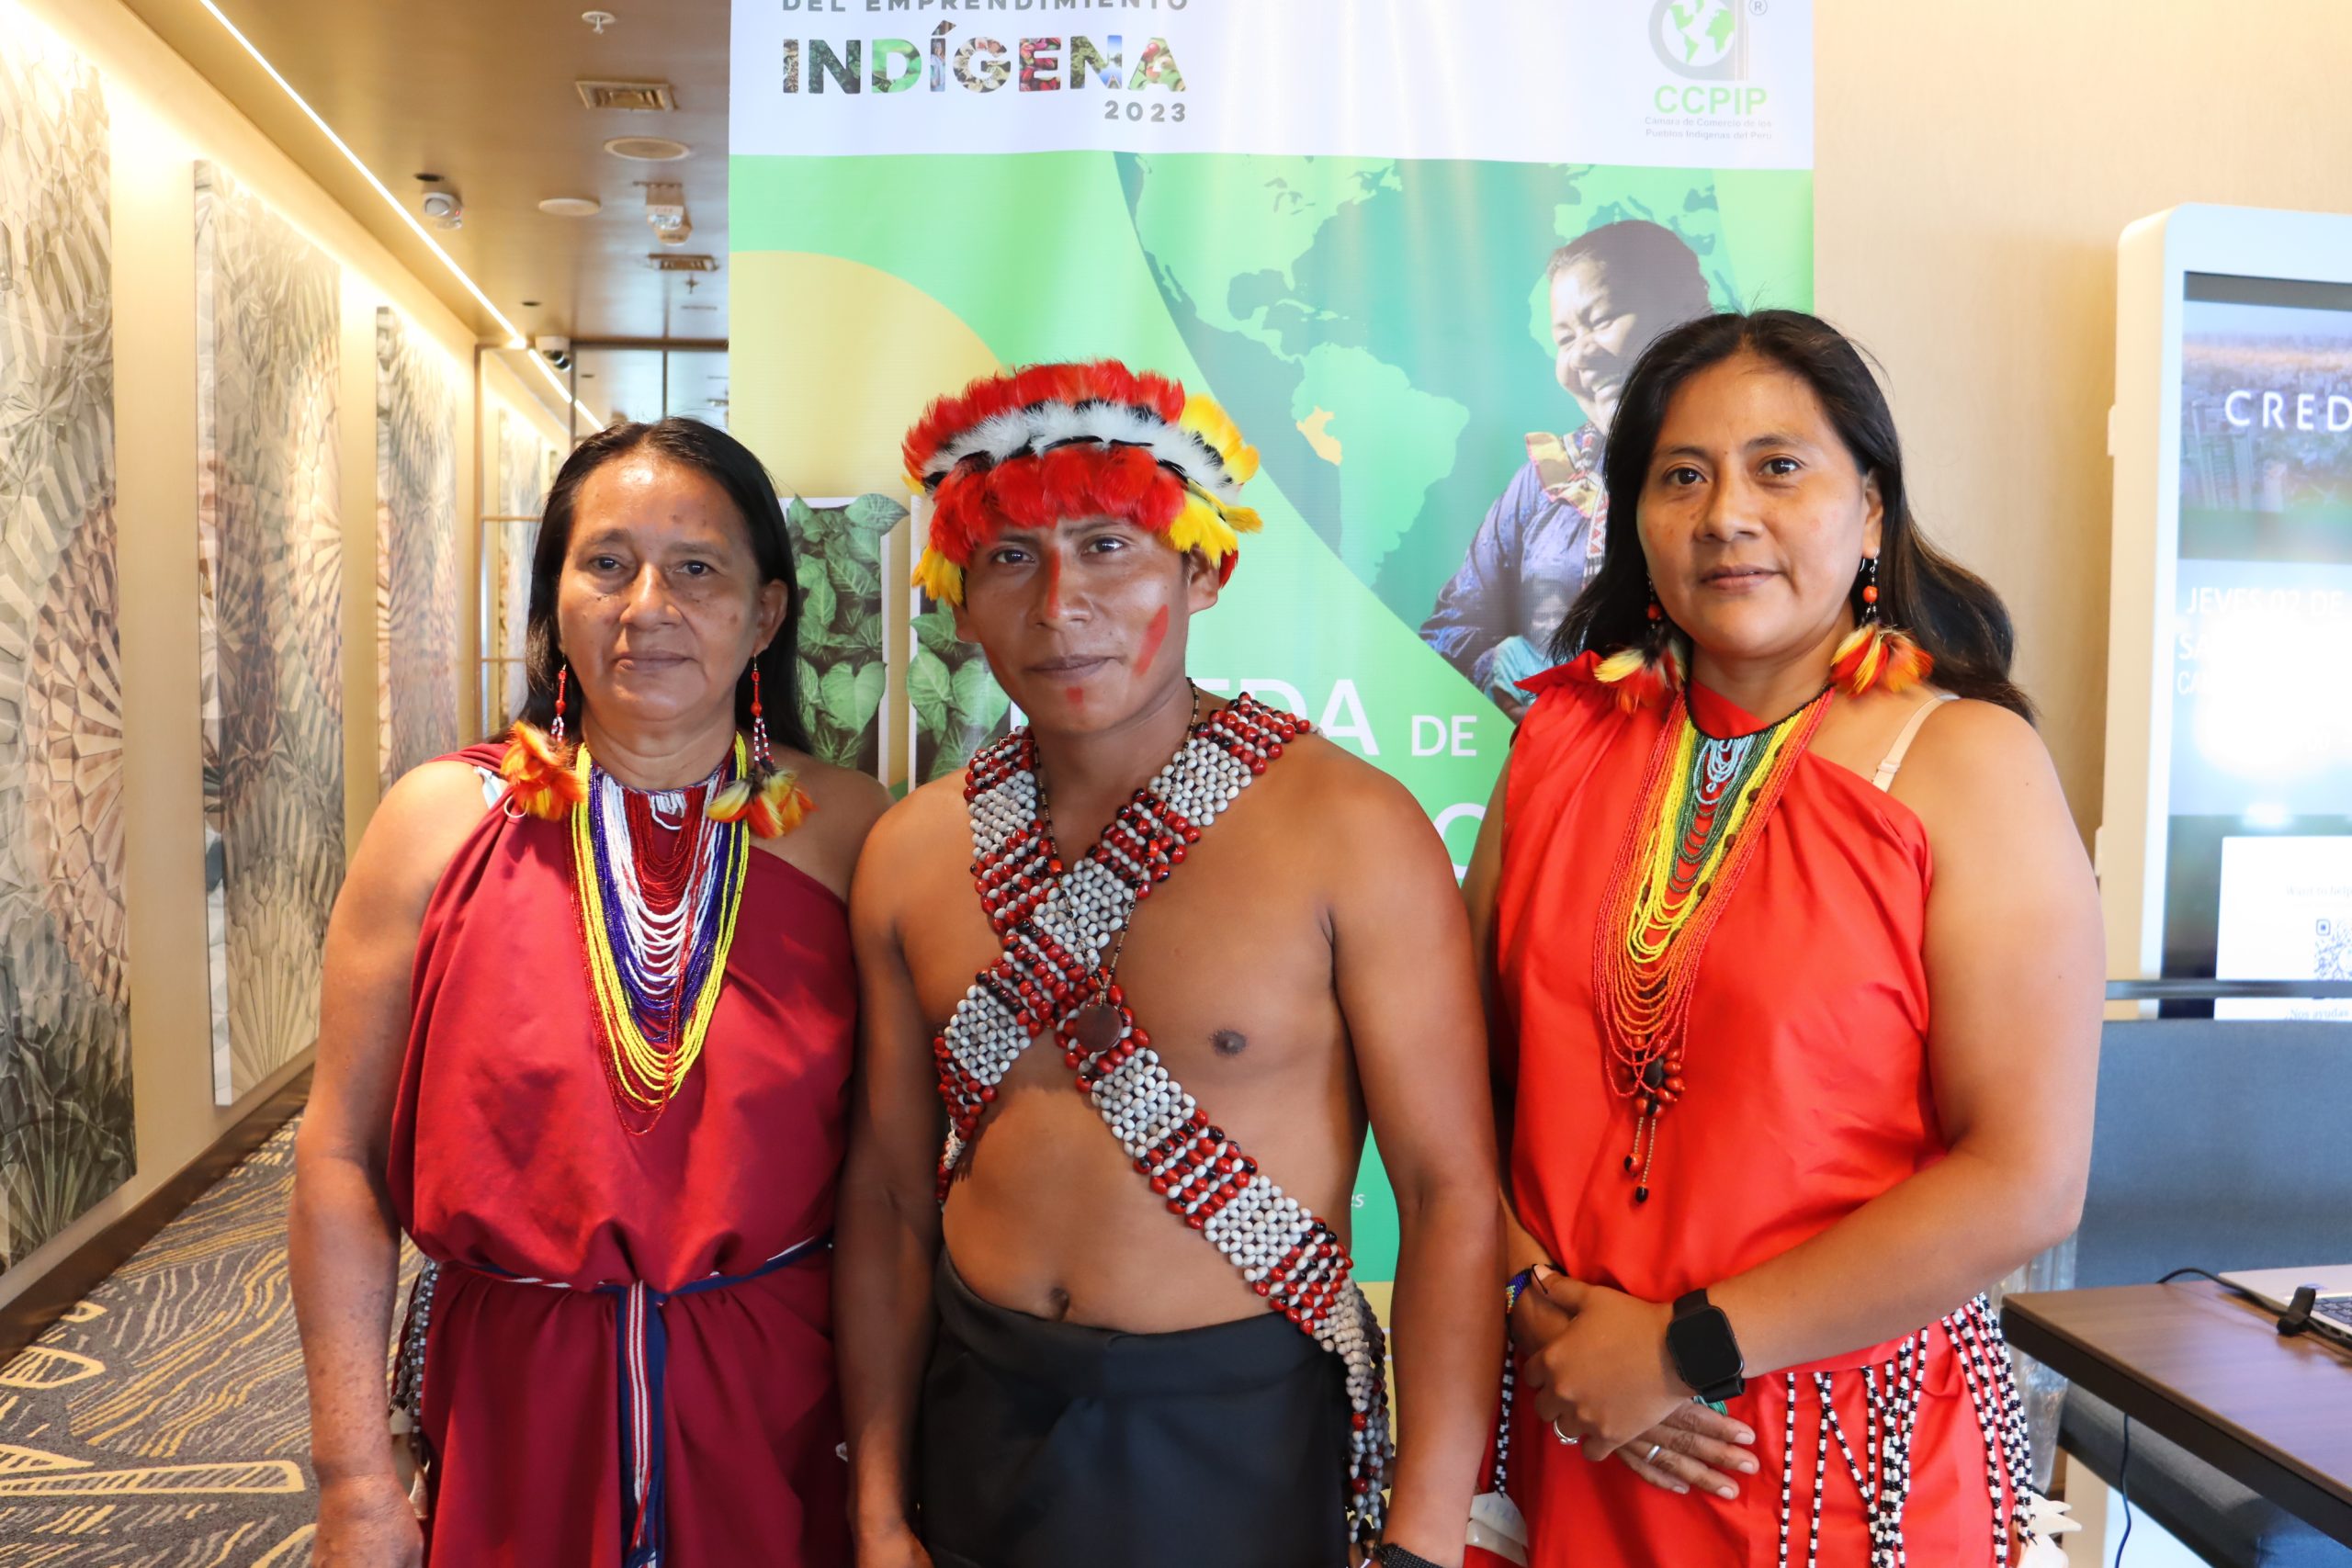 Amano, artisans association from the awajun program at the Business Roundtable of Indigenous entrepreneurship